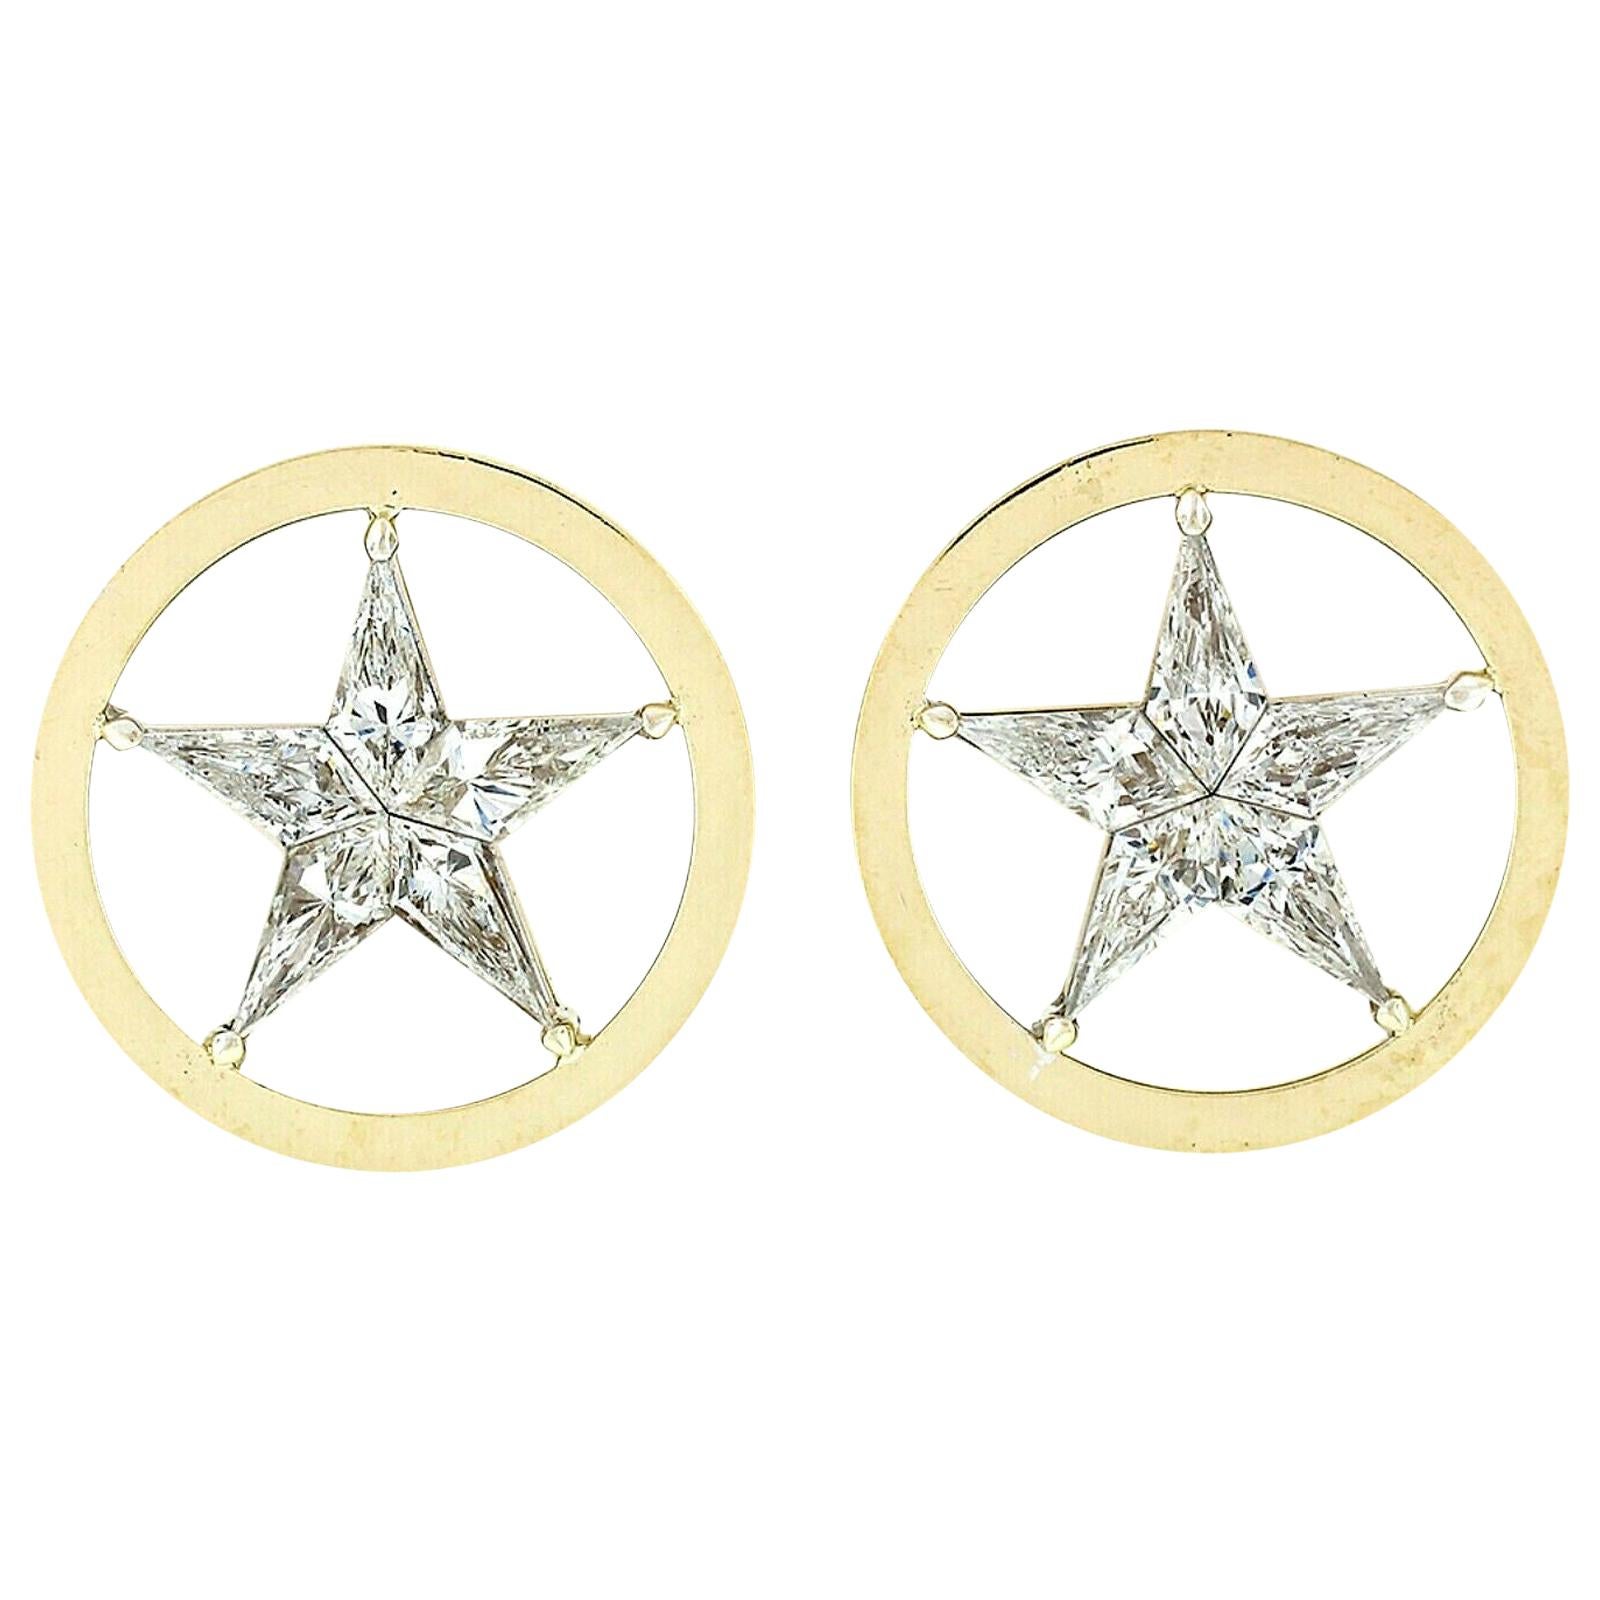 18 Karat Gold 2.75 Carat Floating Star Kite Cut Diamond Round Open Stud Earrings